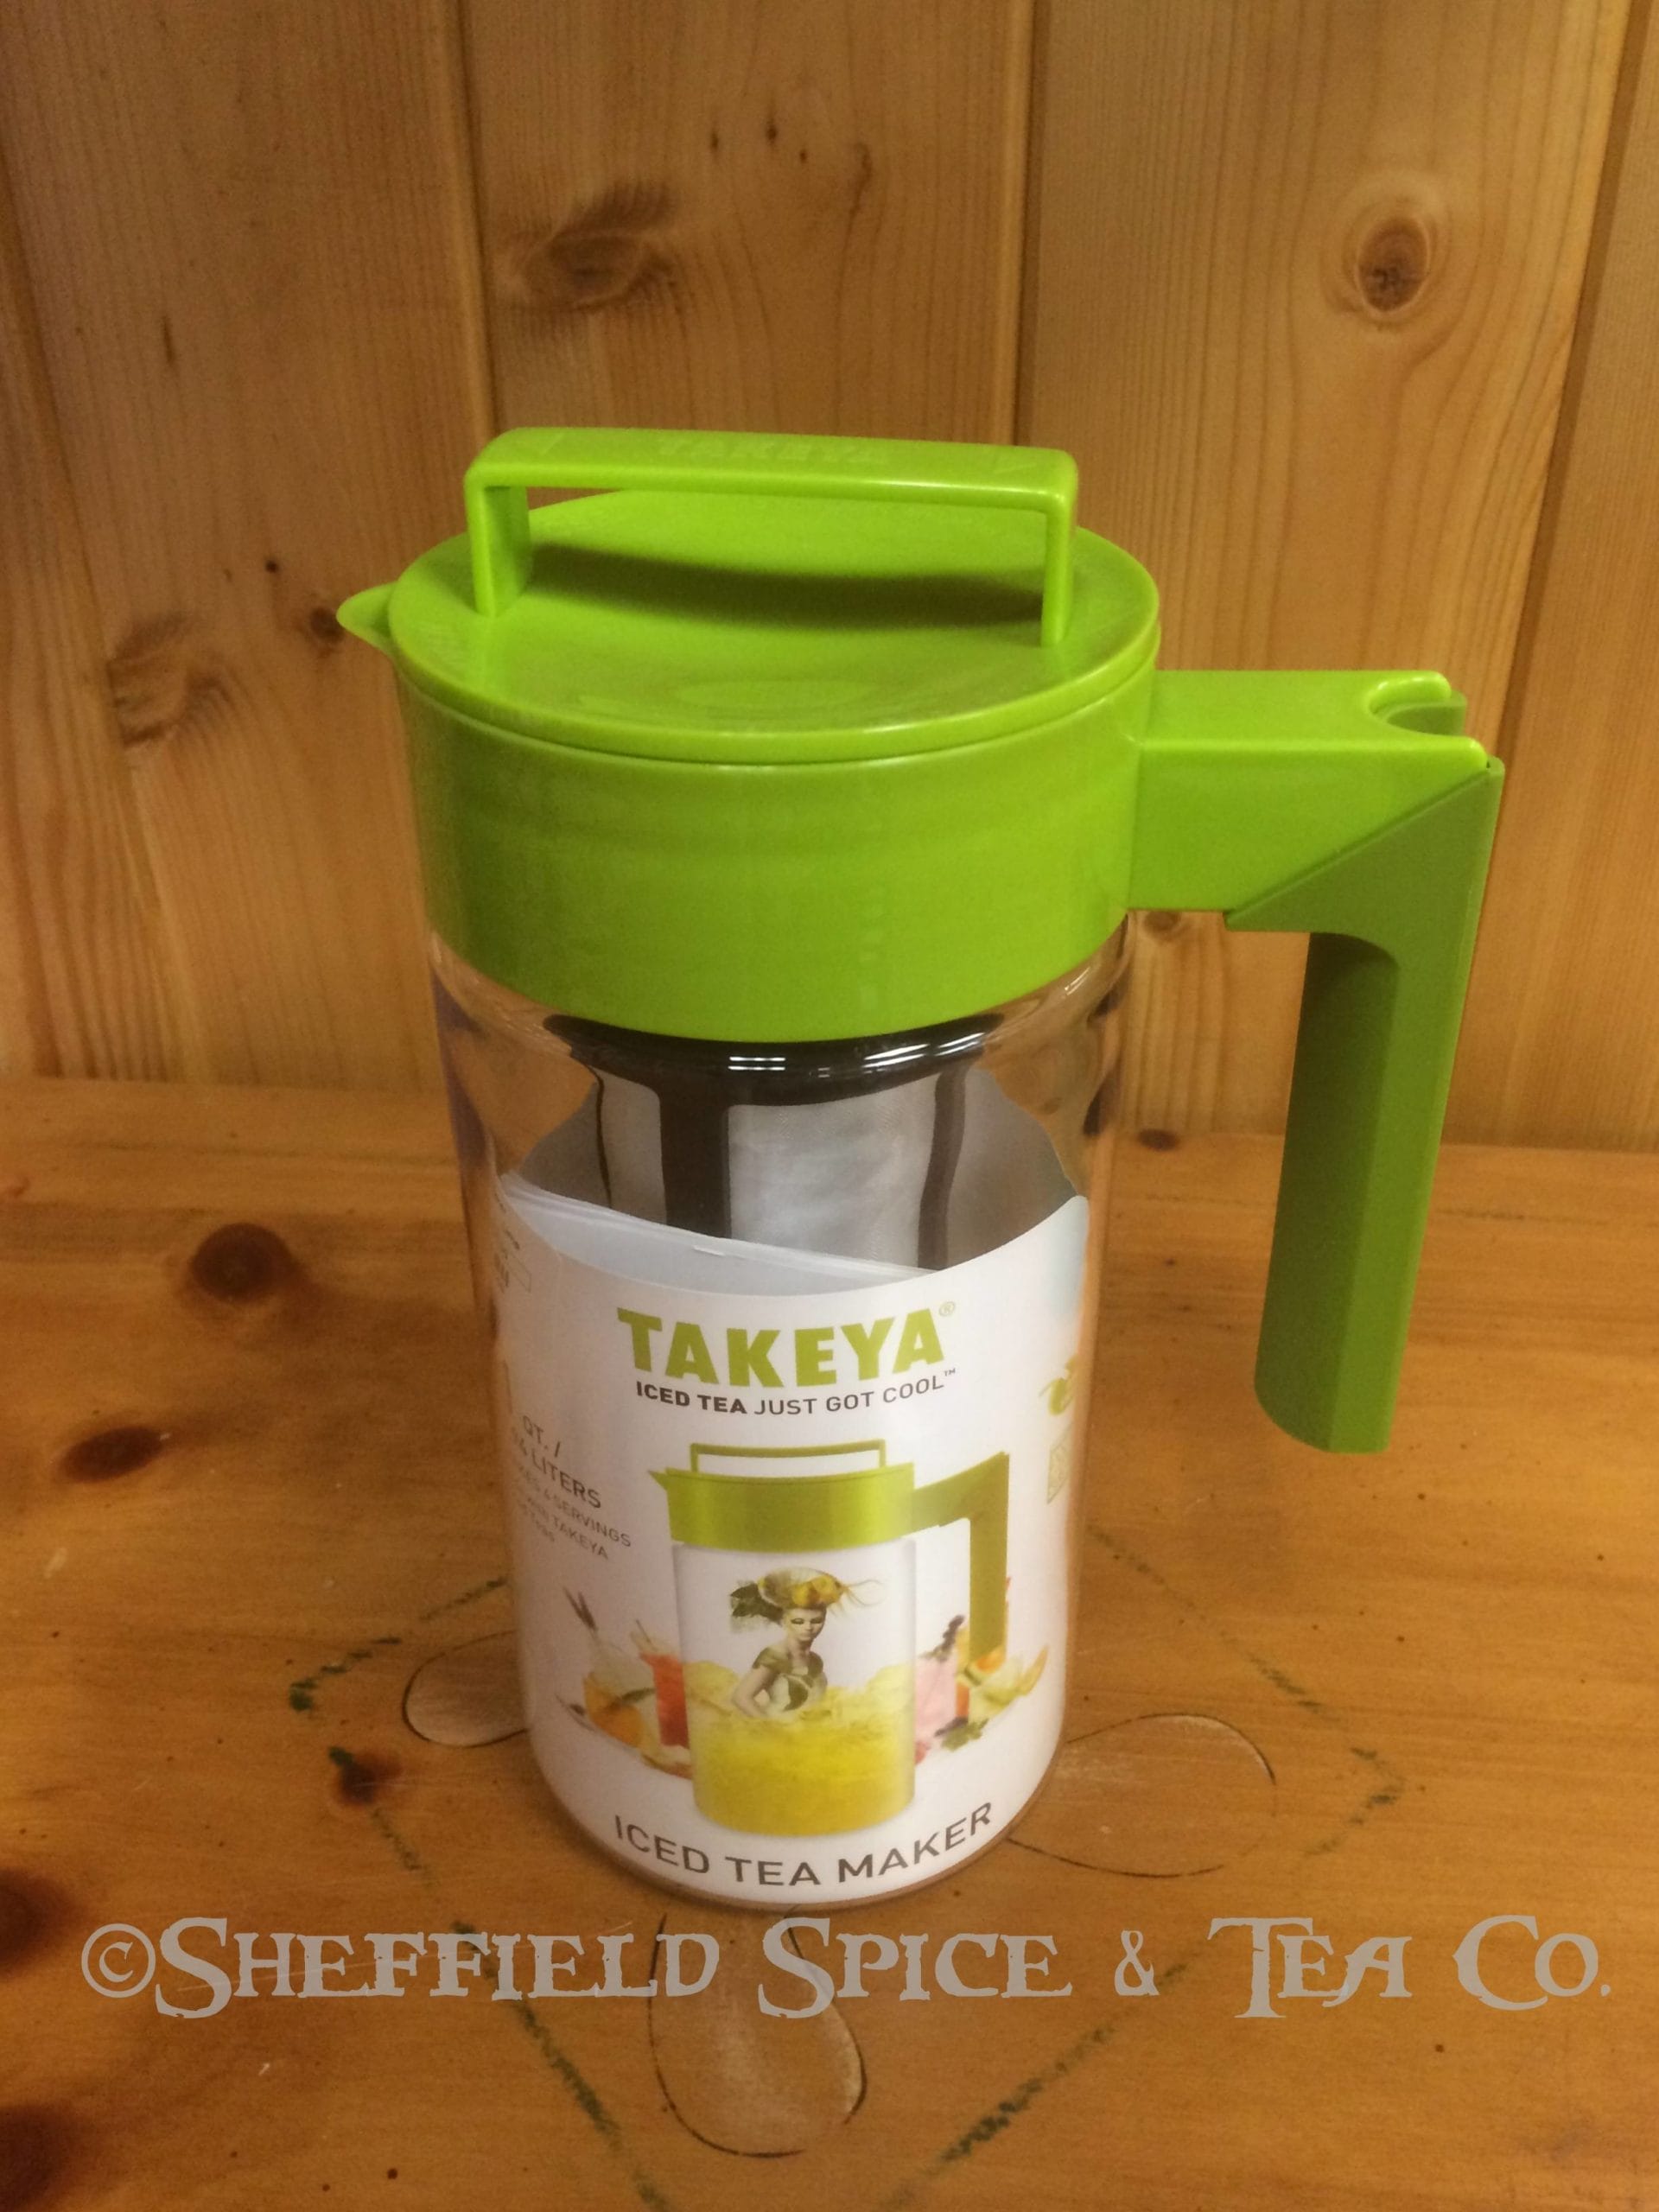 https://epjr3q9r9ms.exactdn.com/wp-content/uploads/2015/09/takeya-flash-chill-iced-tea-maker-1-qt-lime-scaled.jpg?strip=all&lossy=1&ssl=1